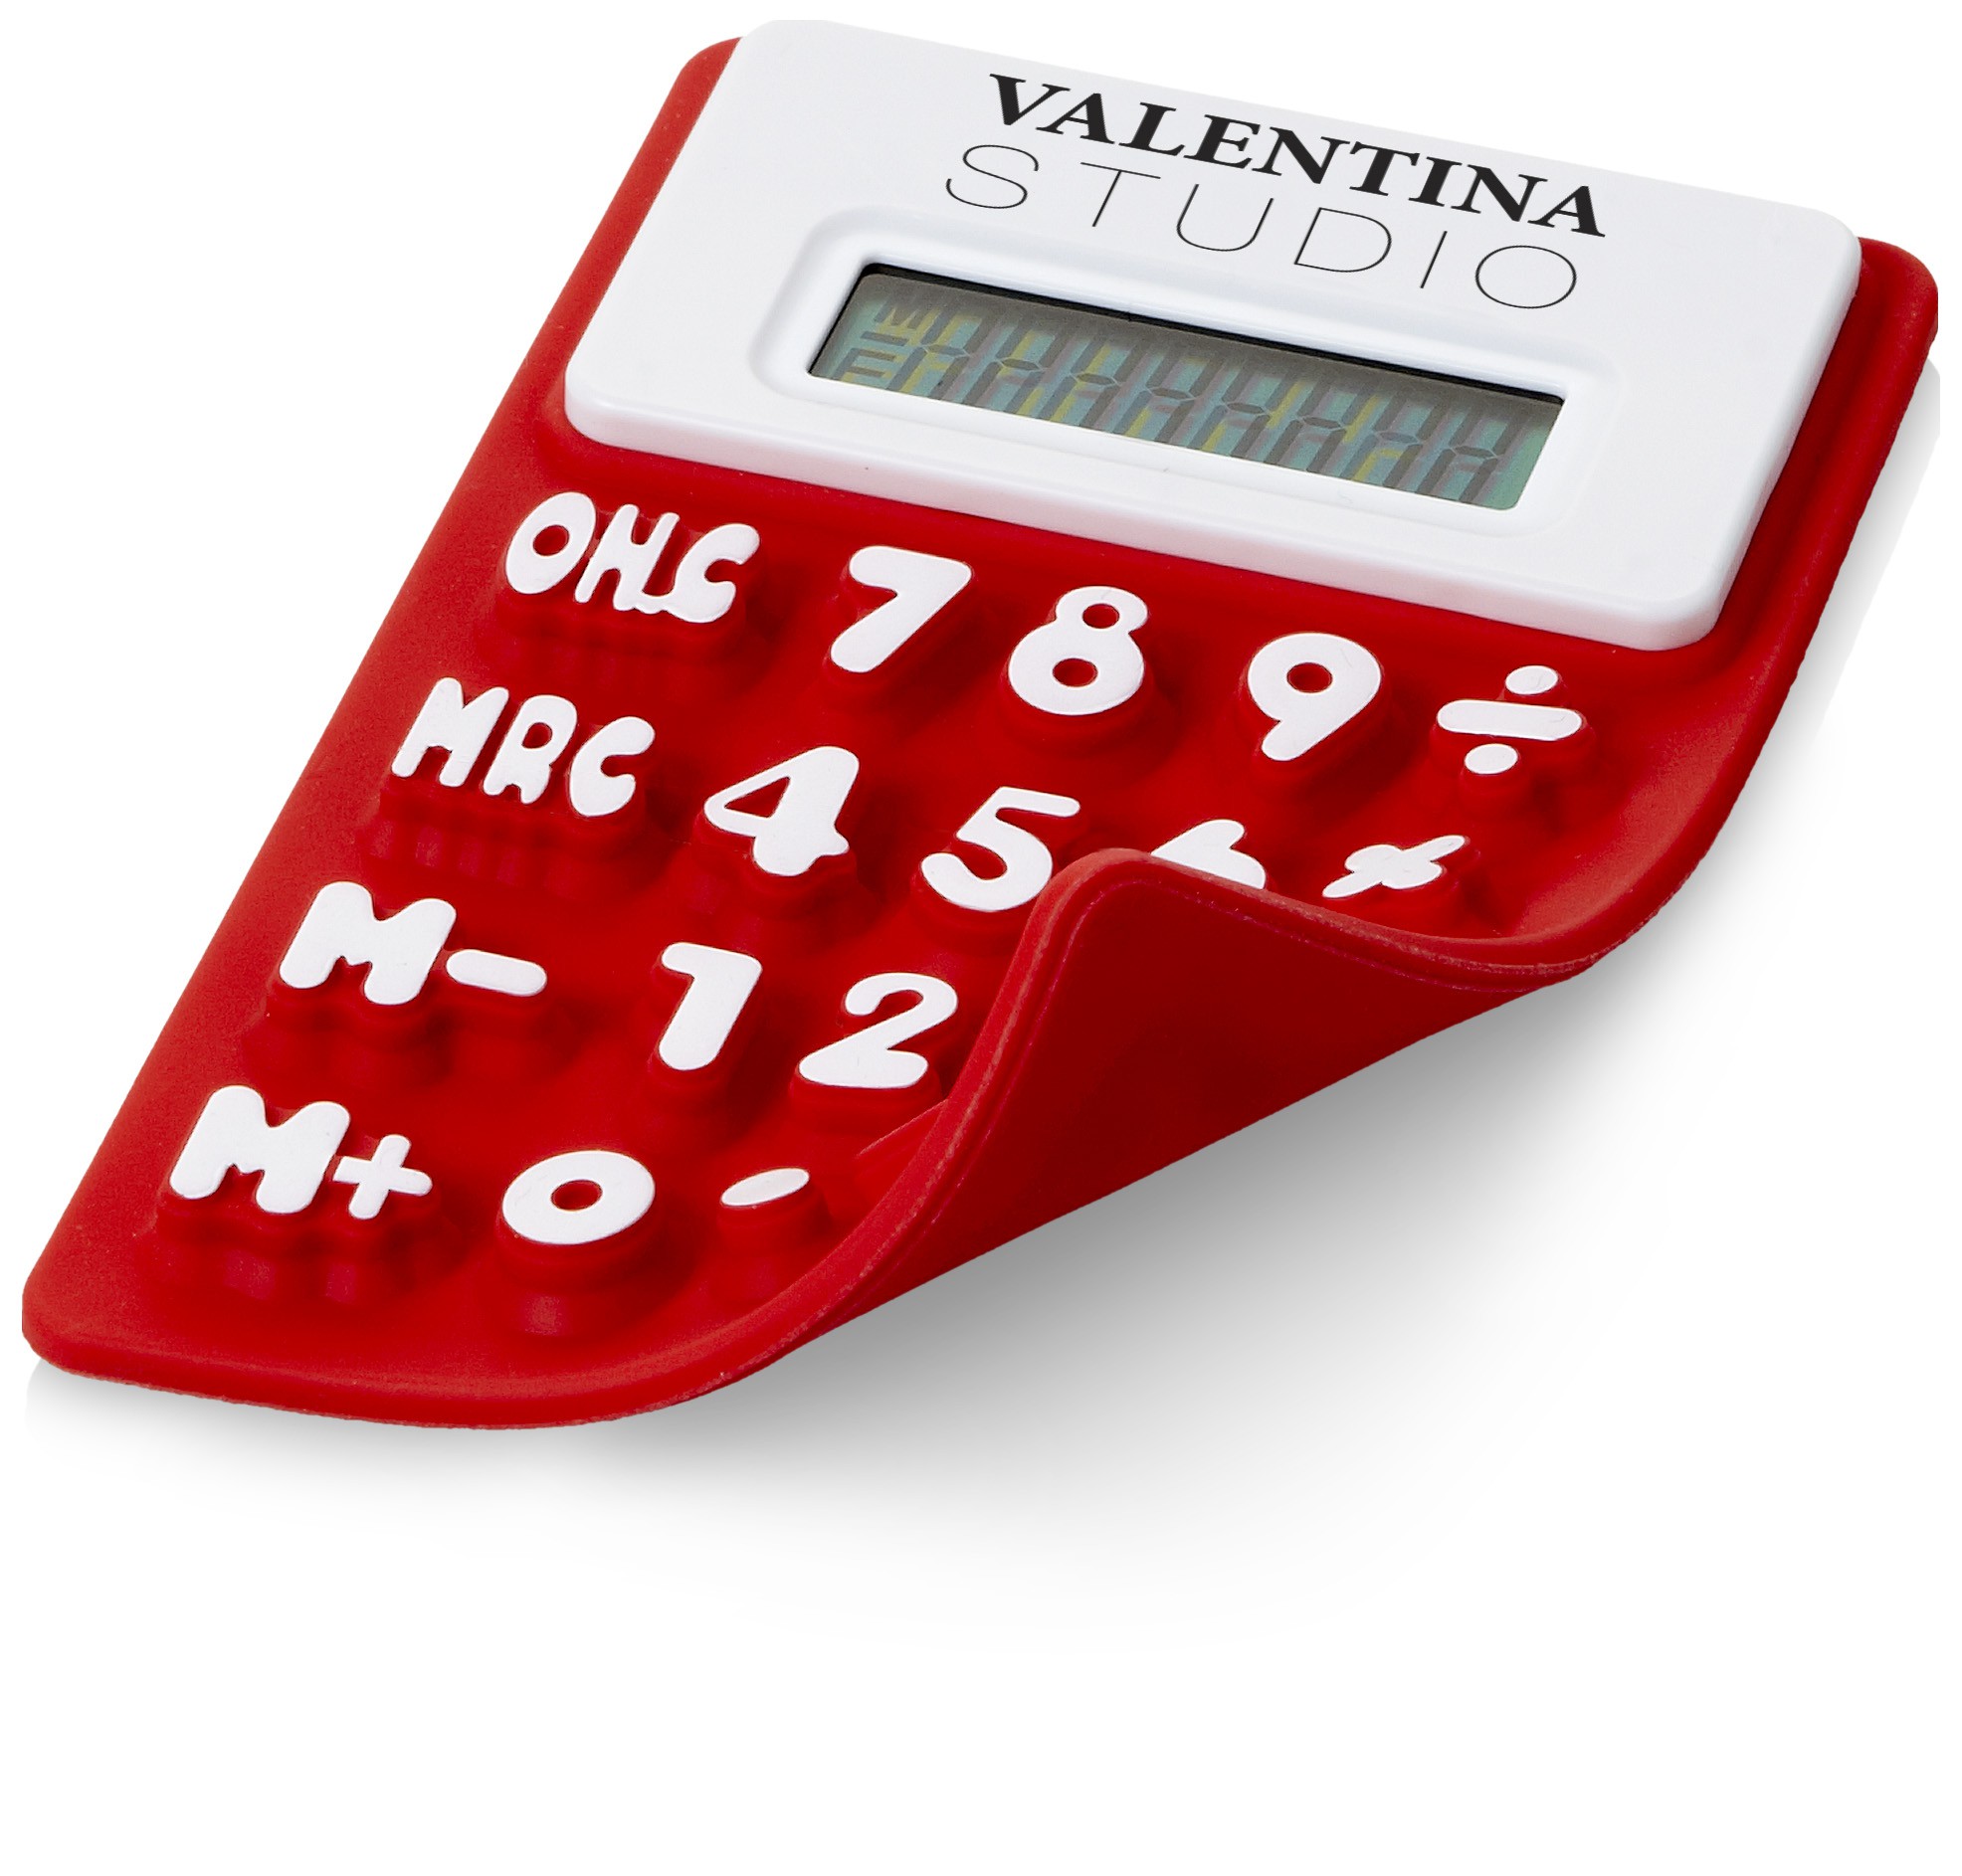 Red calculator photo